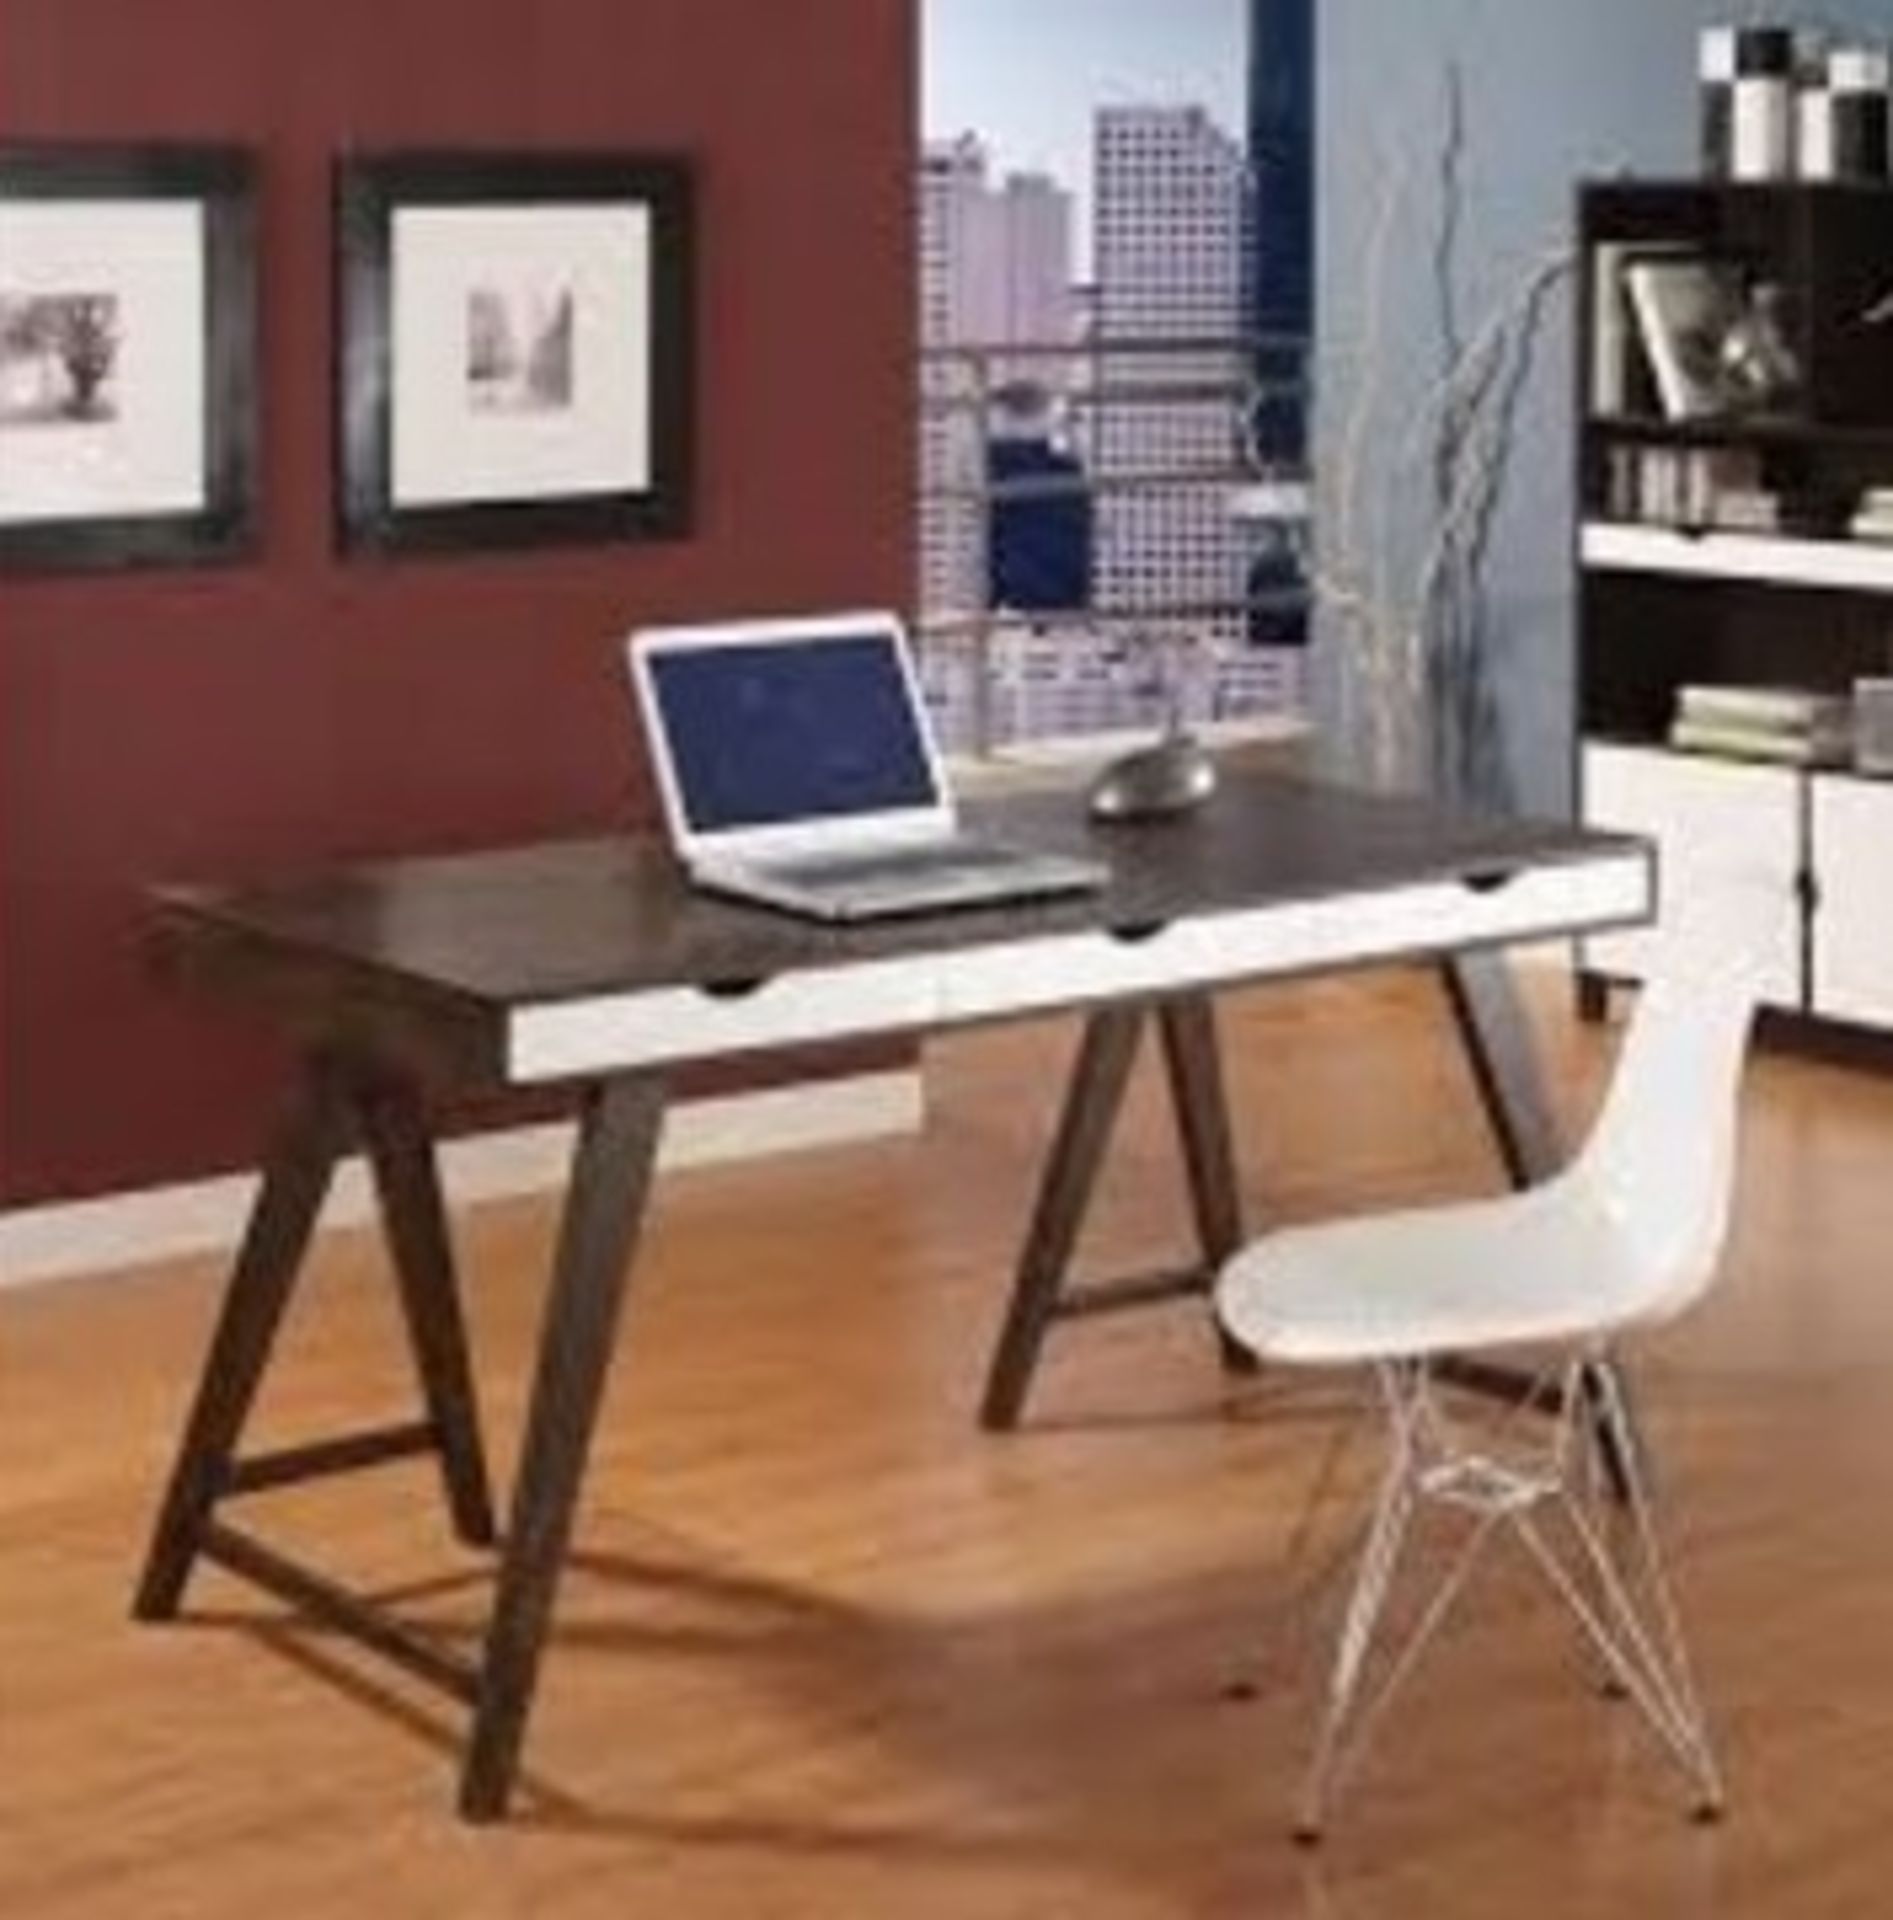 1 x Blue Suntree Ellwood Trestle Desk With a Dark Walnut Finish - RRP £280.00! - Image 2 of 3